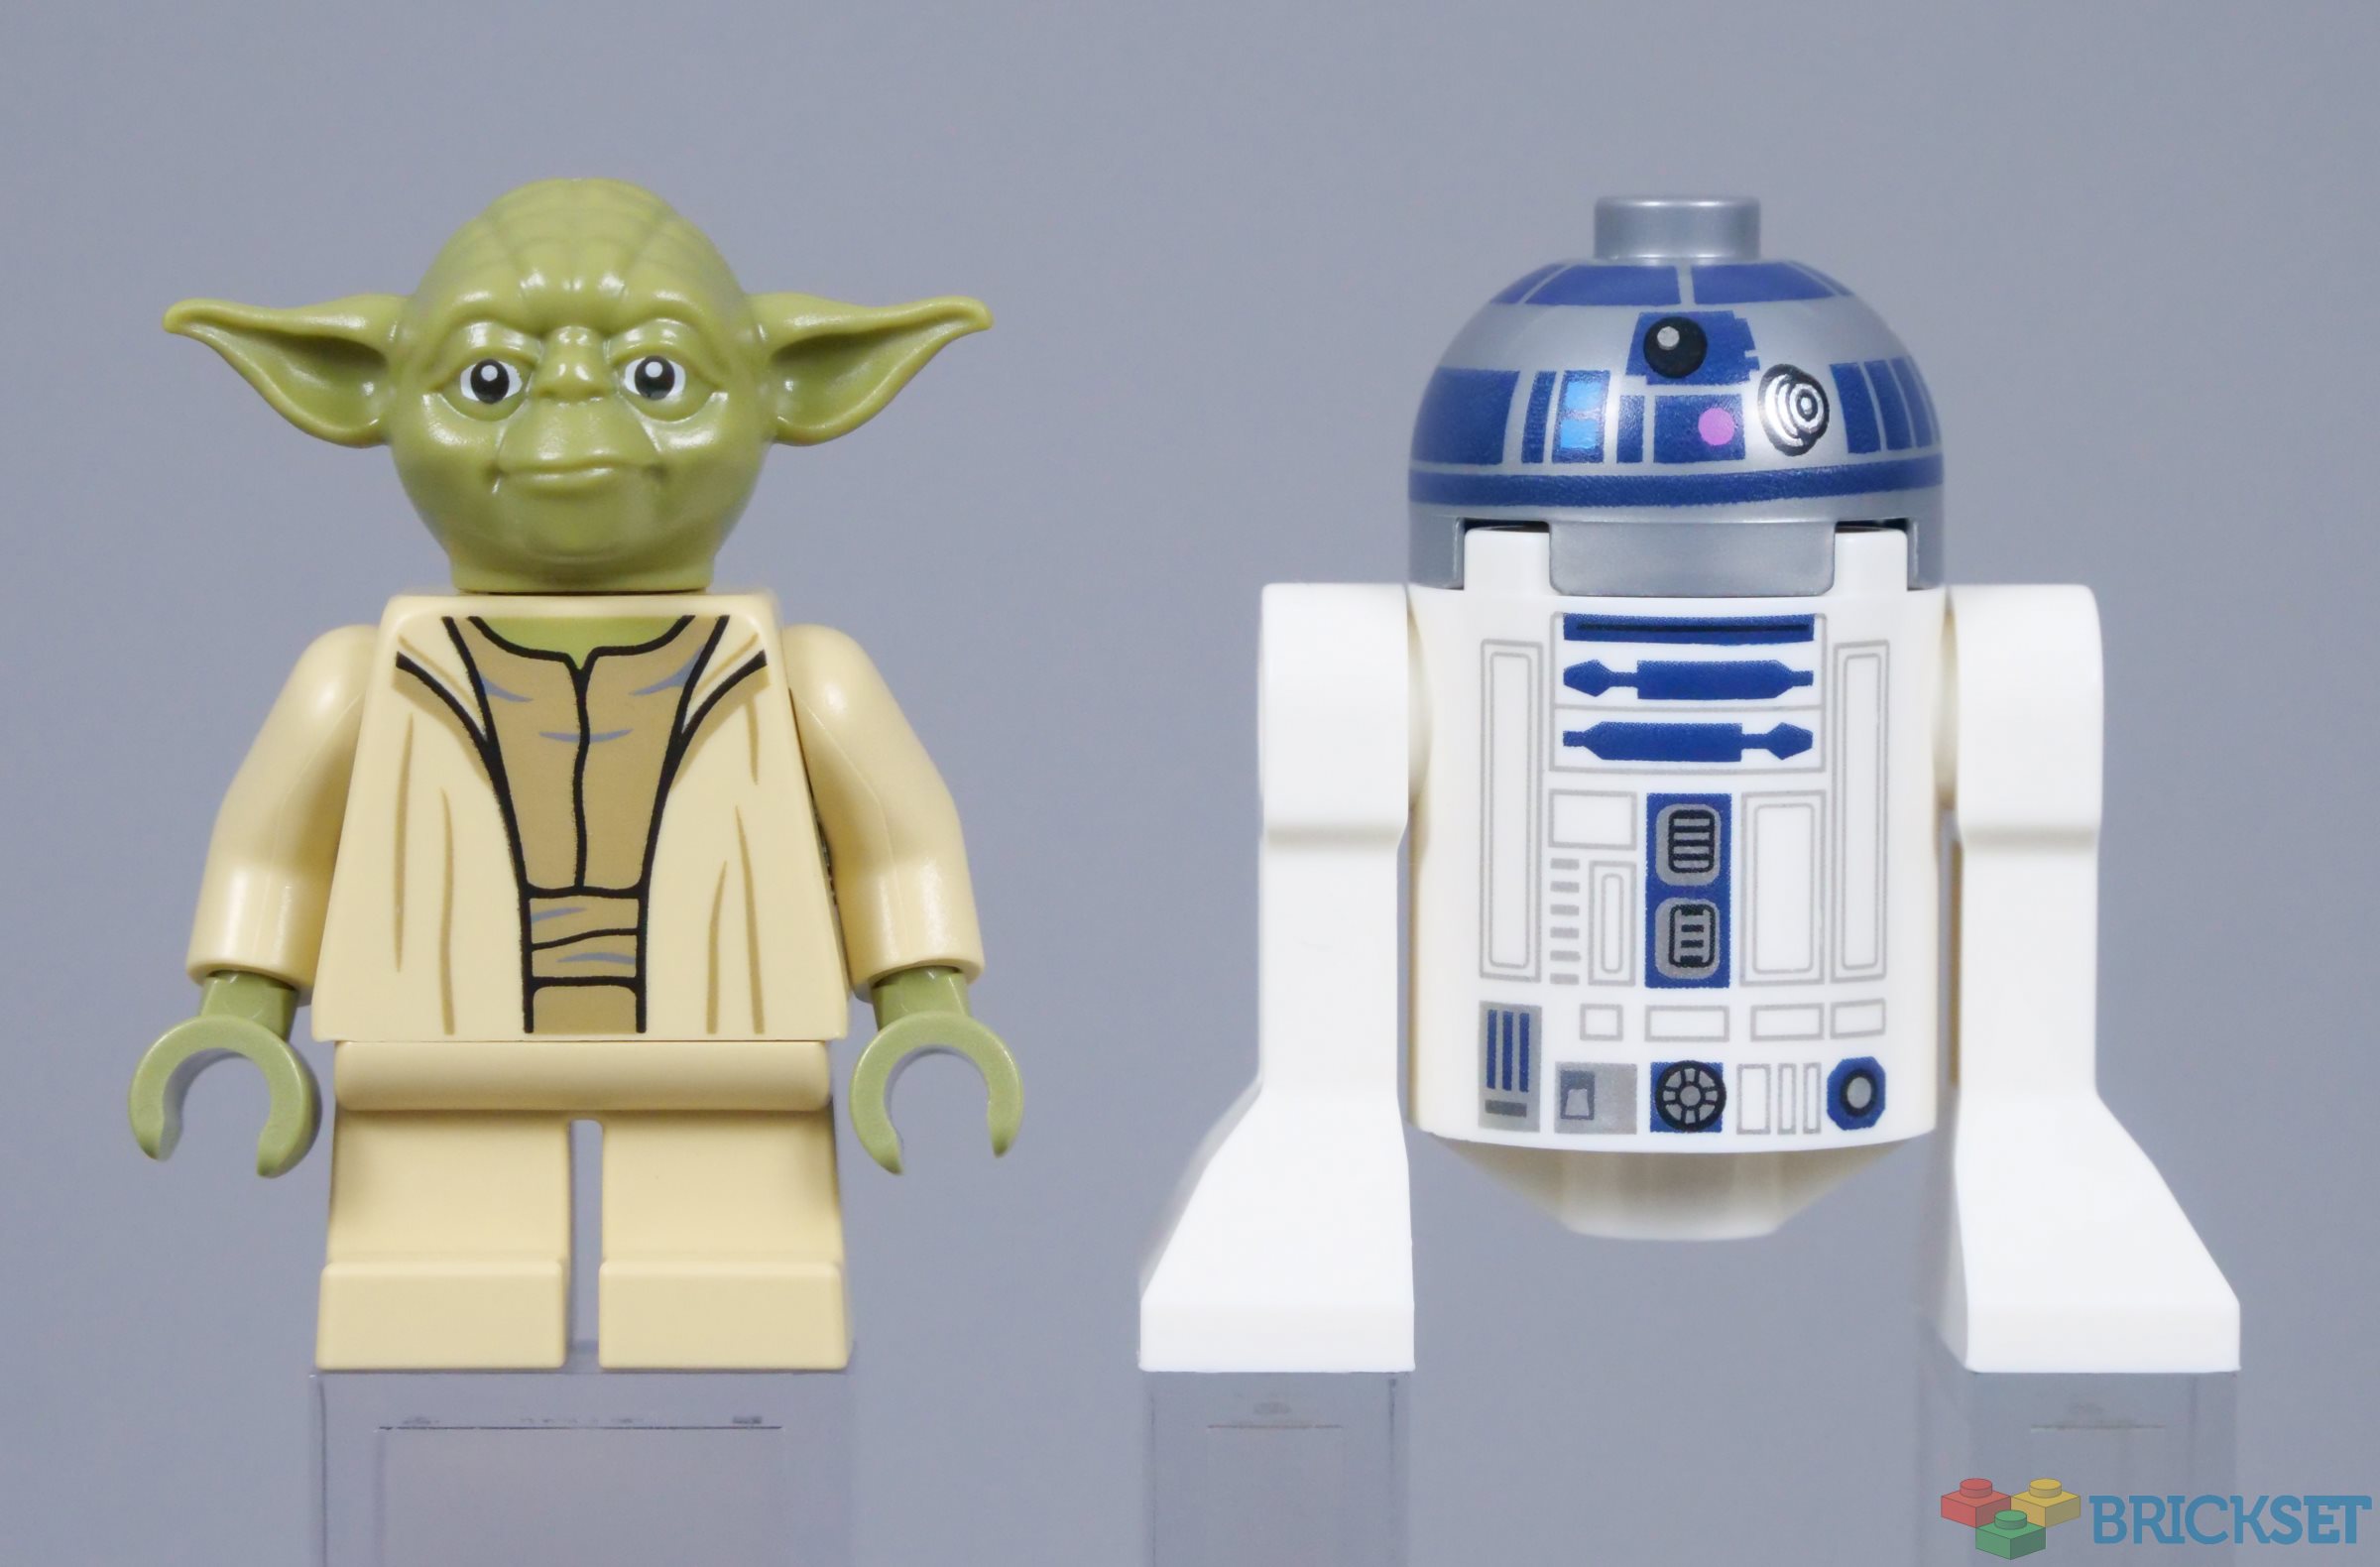 LEGO 75360 Yoda's Jedi Starfighter review